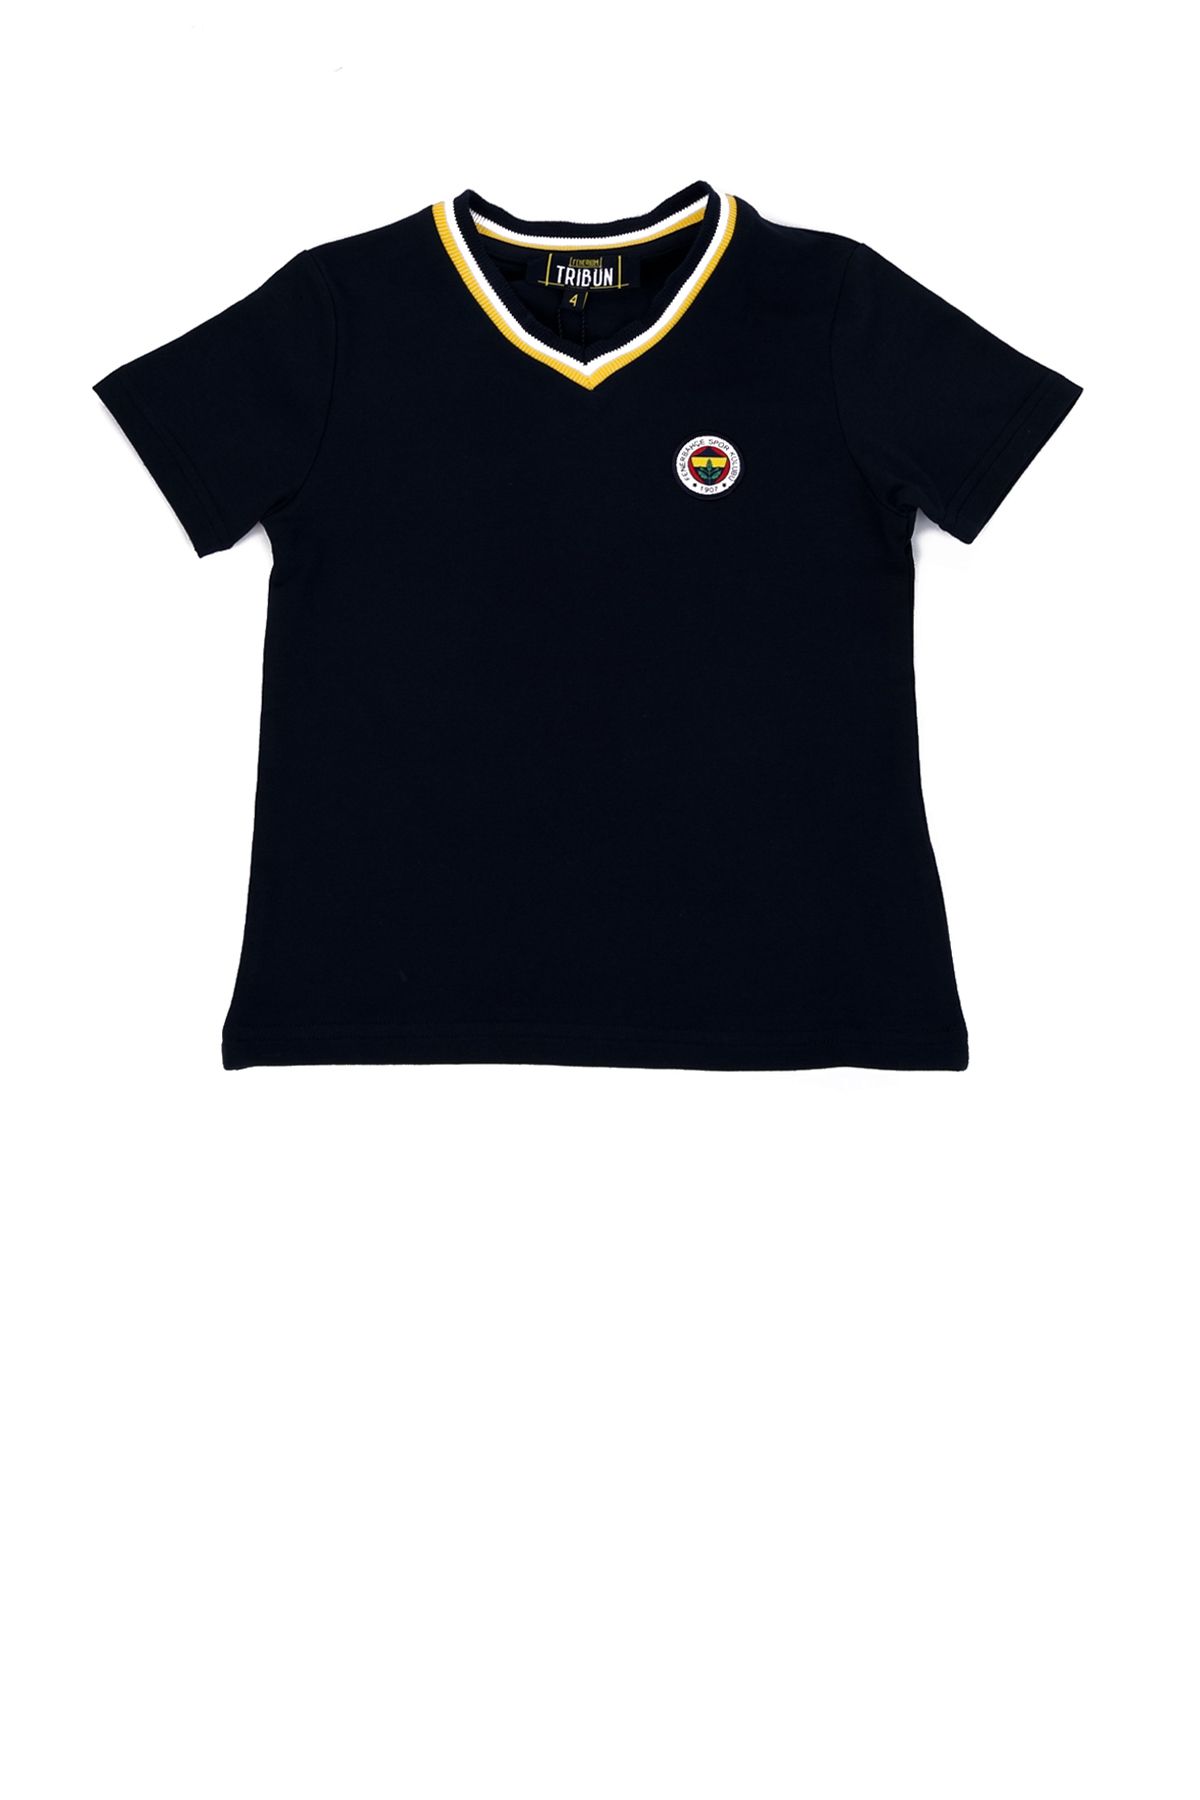 Fenerbahçe Fenerbahçe Çocuk Lacivert T-Shirt - TK010C8K21